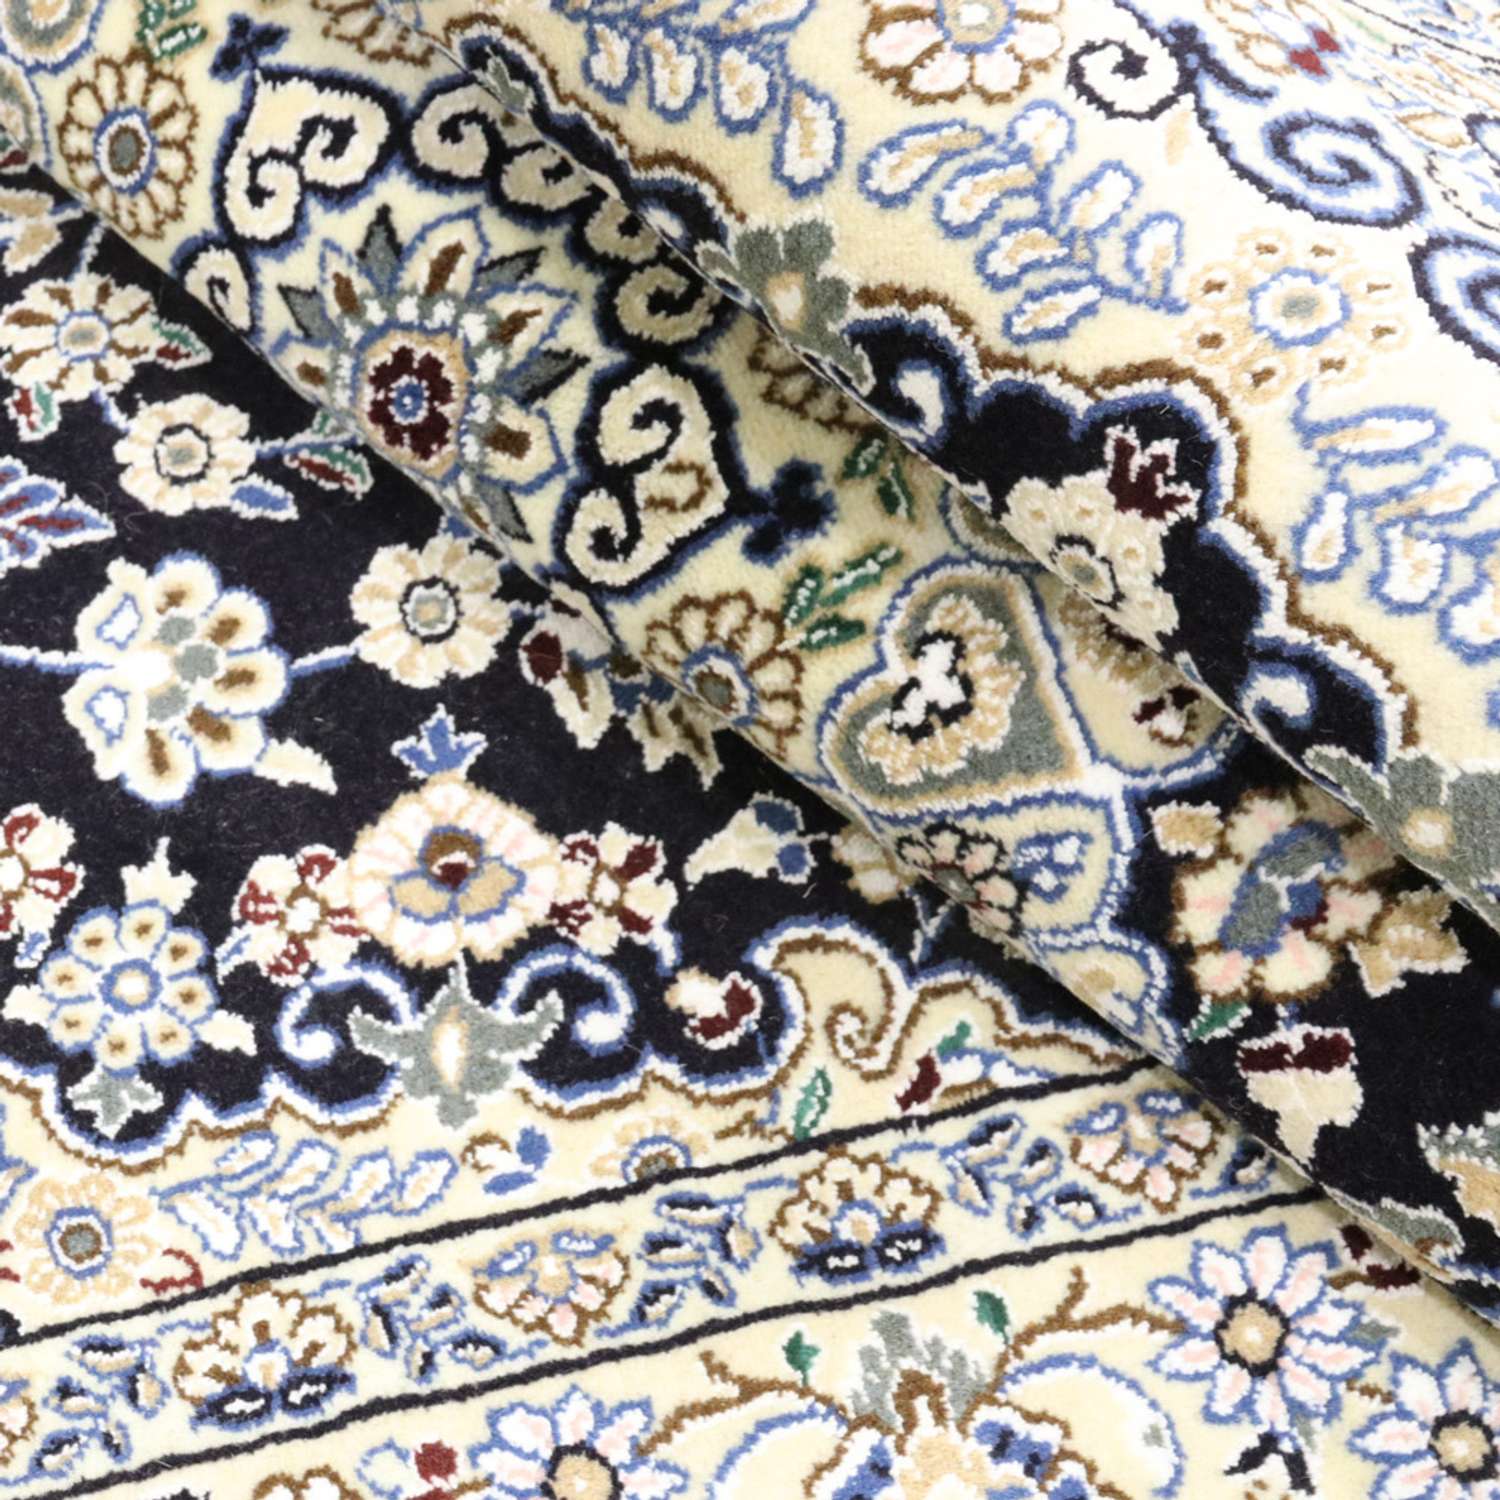 Perzisch tapijt - Nain - Koninklijk - 202 x 130 cm - donkerblauw